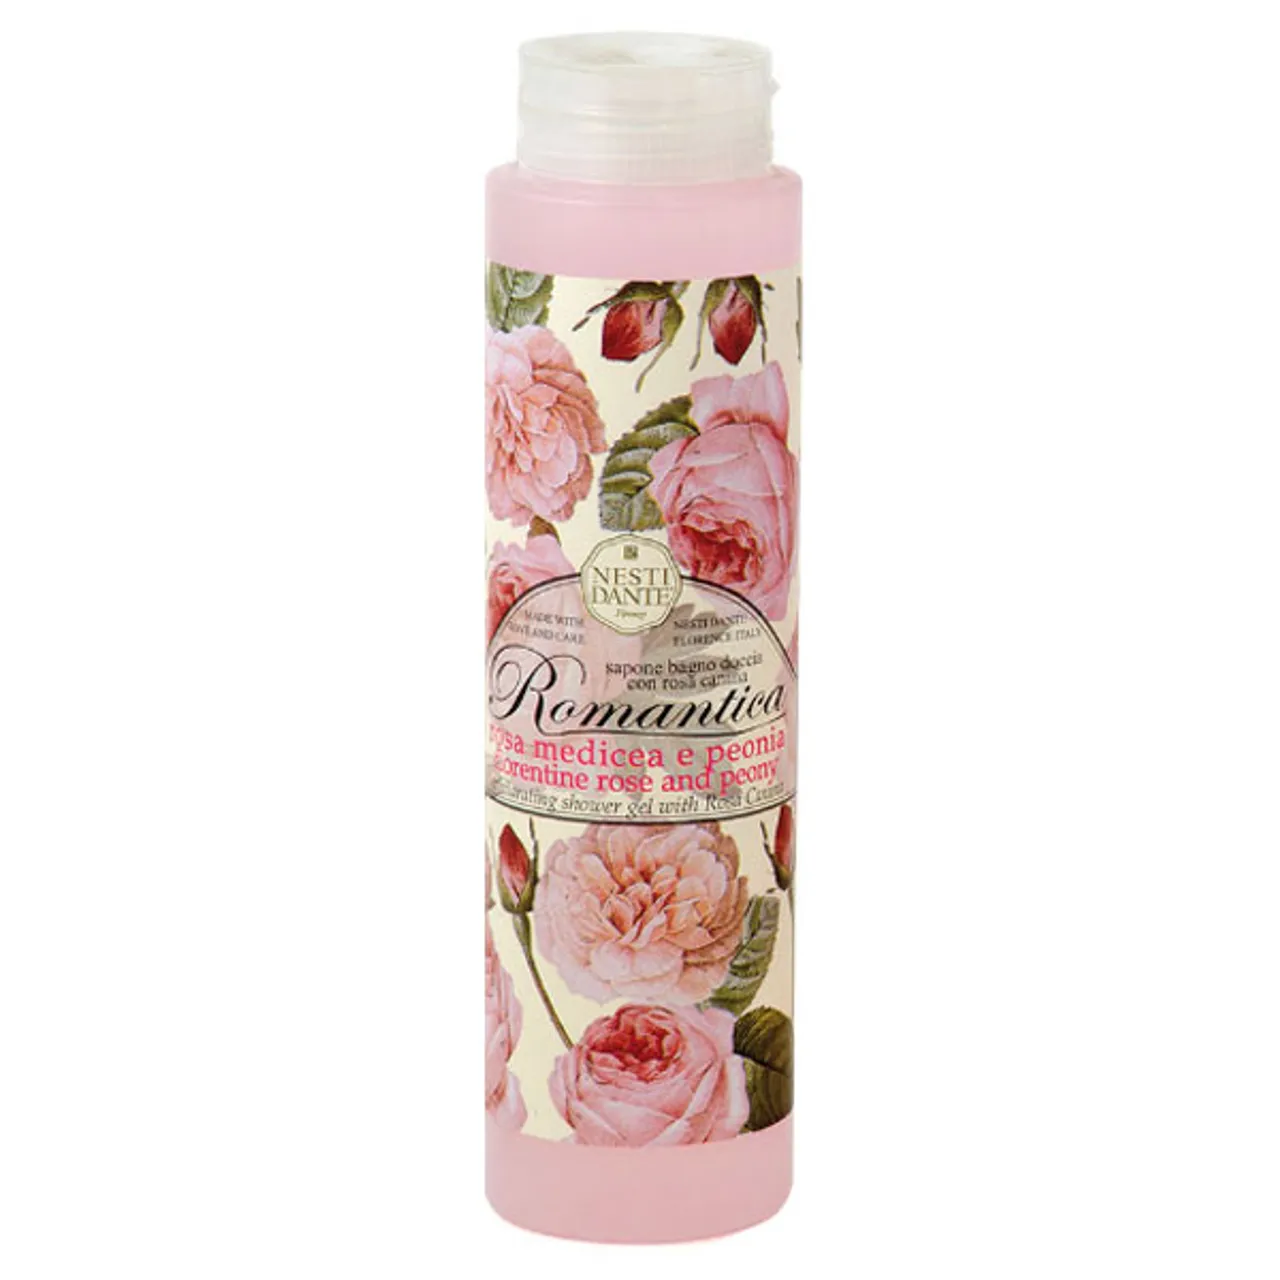 Romantica: Florentijnse rozen&Pioenroos showergel 300 ml